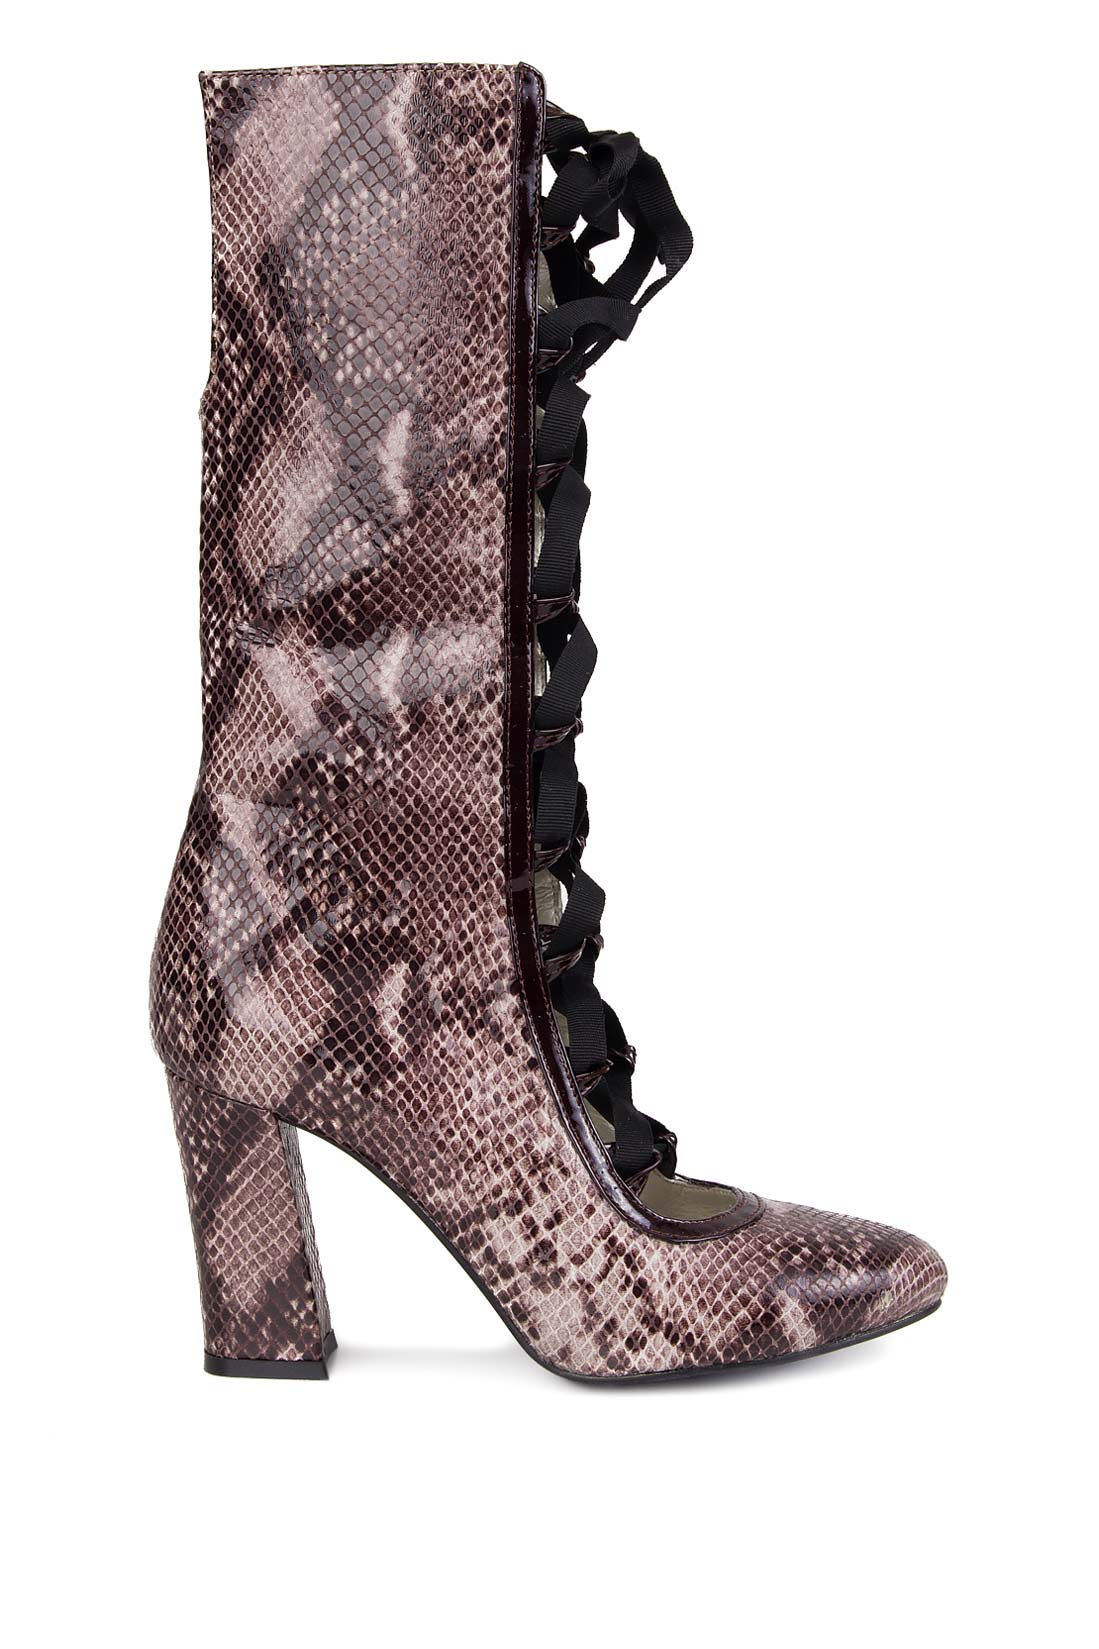 Lace-up python-type leather boots Ana Kaloni image 0